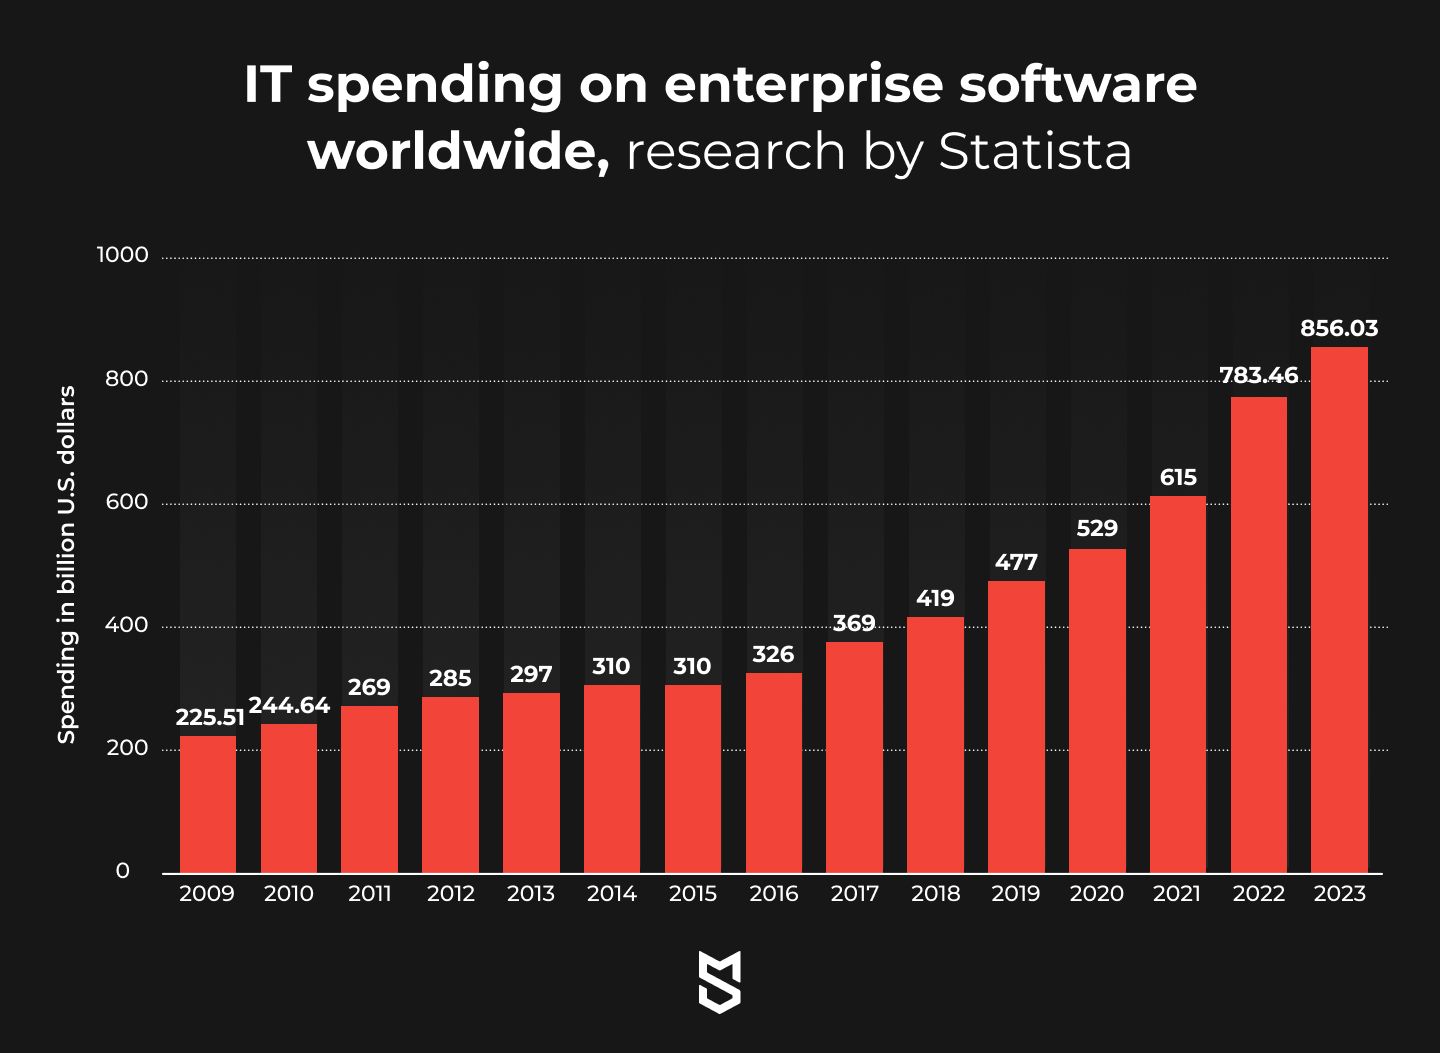 IT spending on enterprise software worldwide, research by Statista